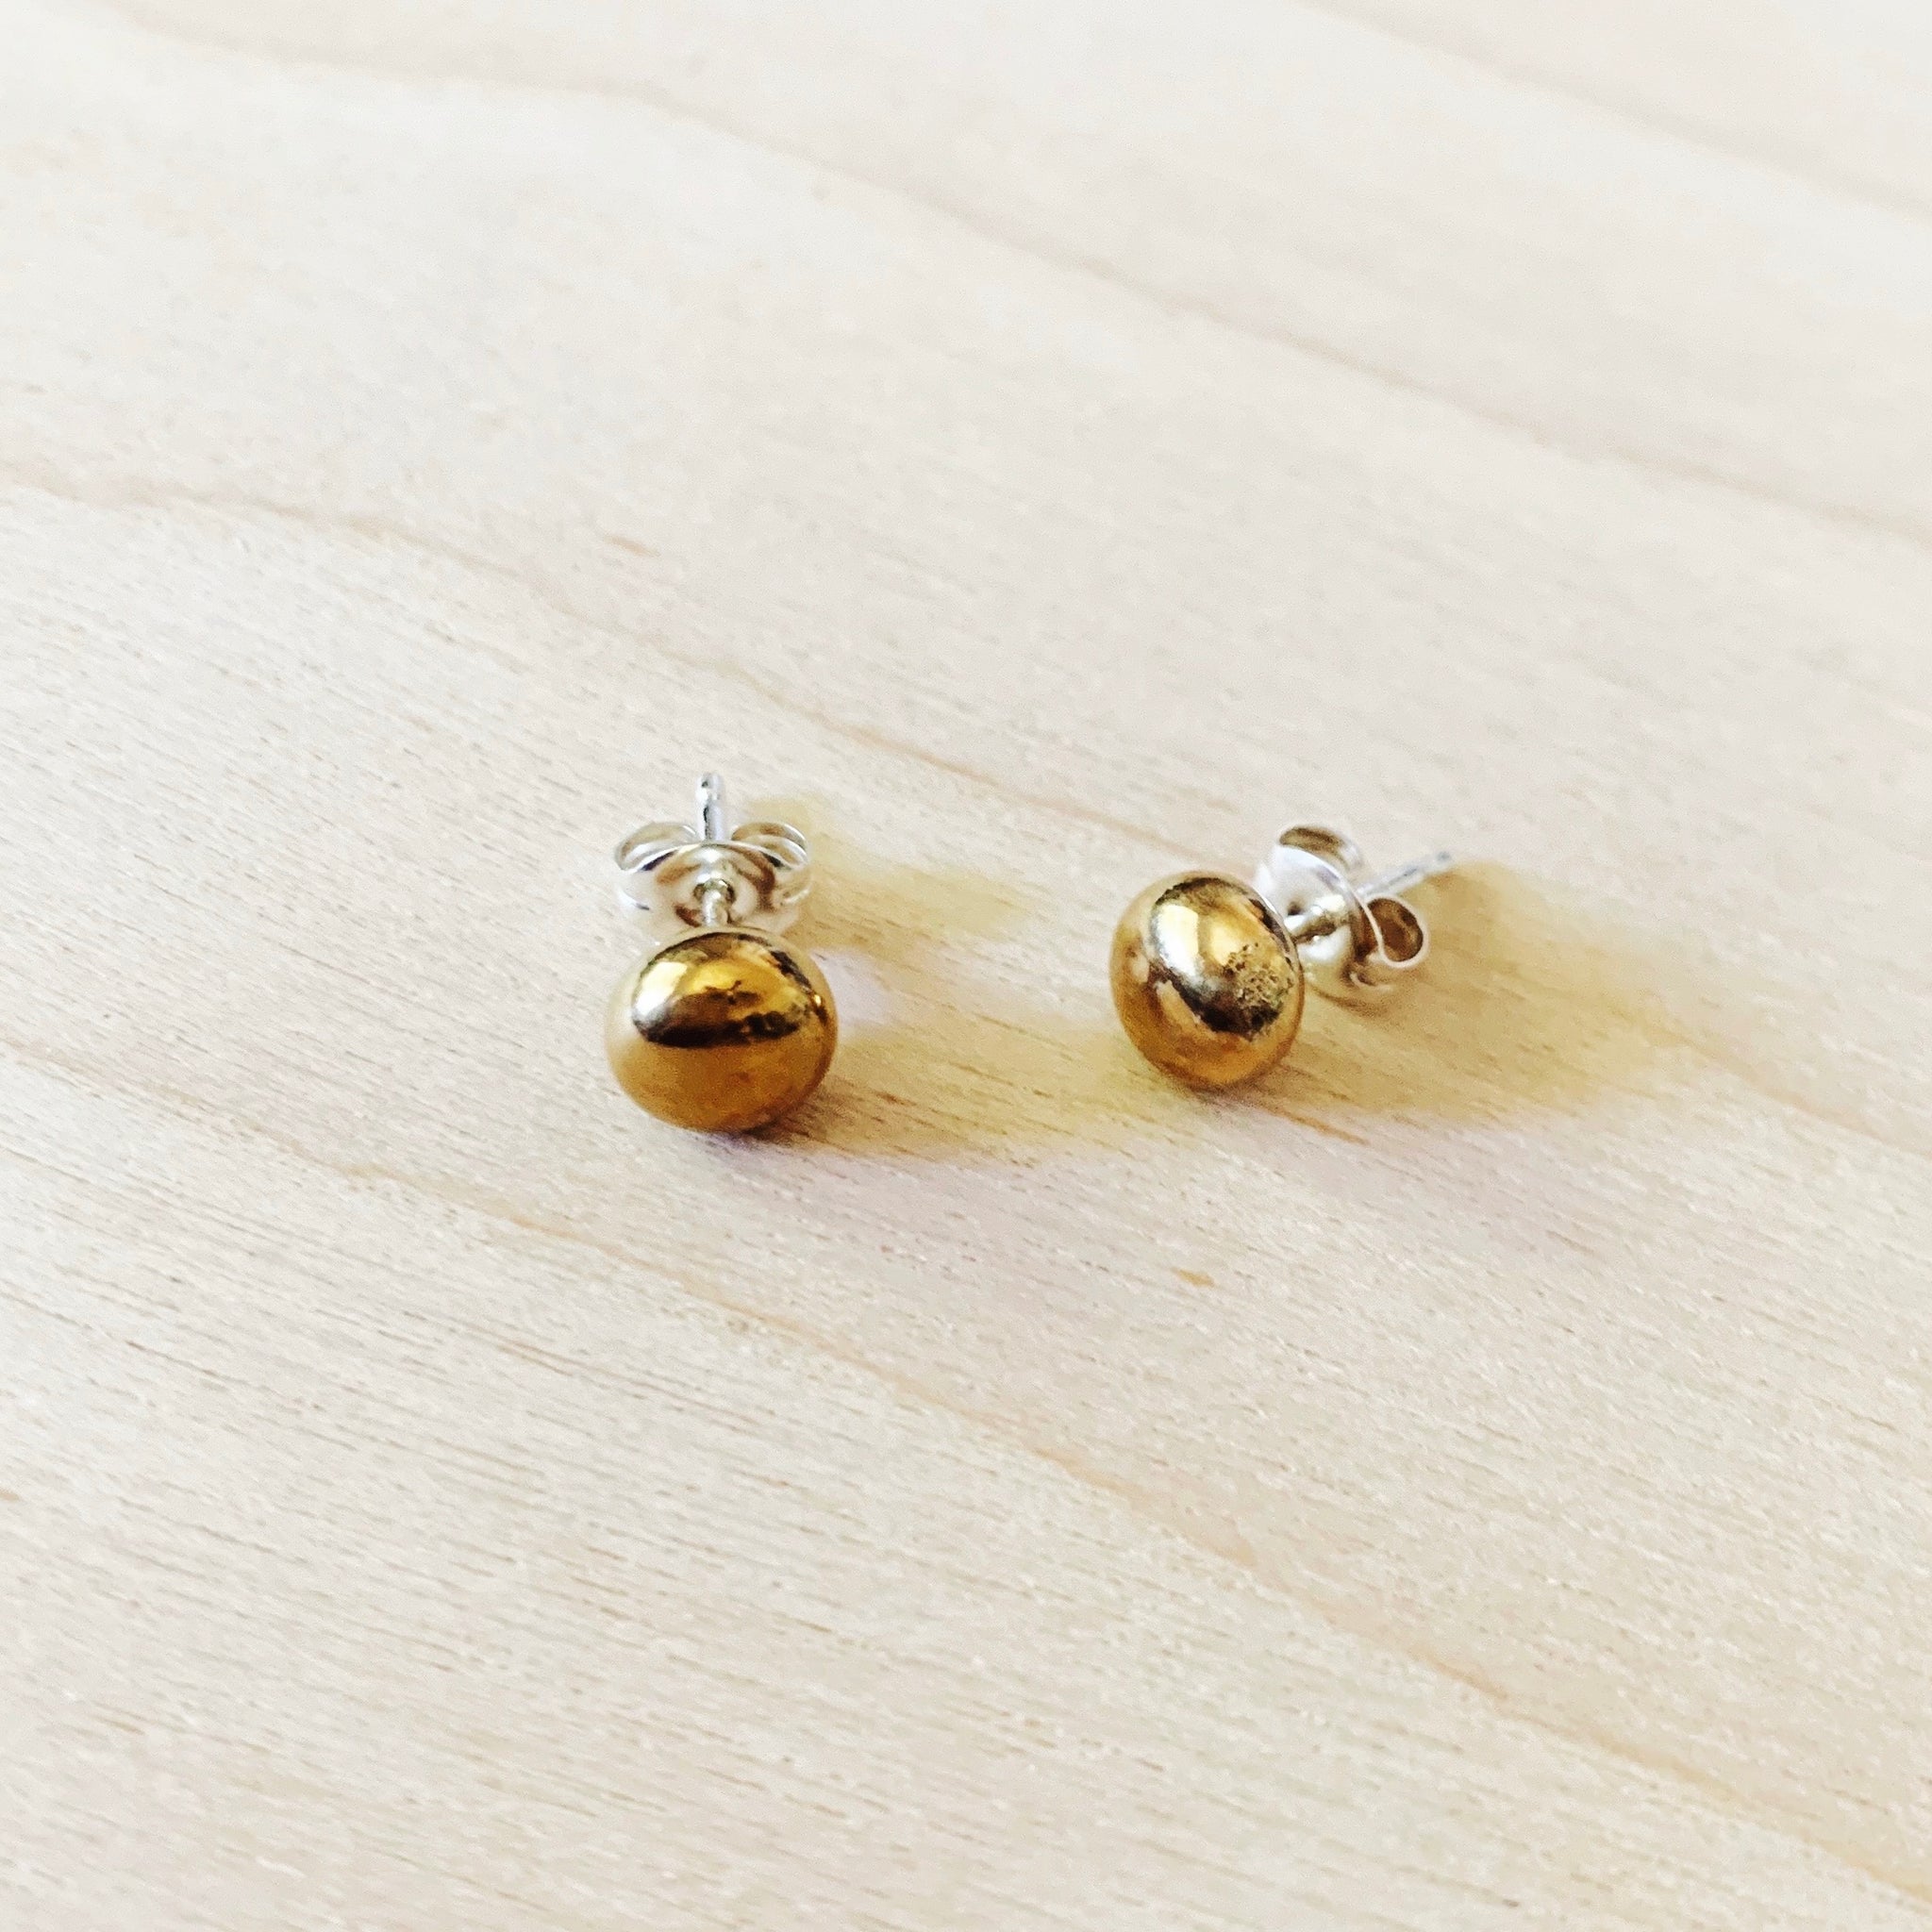 Latest gold stud earrings designs - YouTube